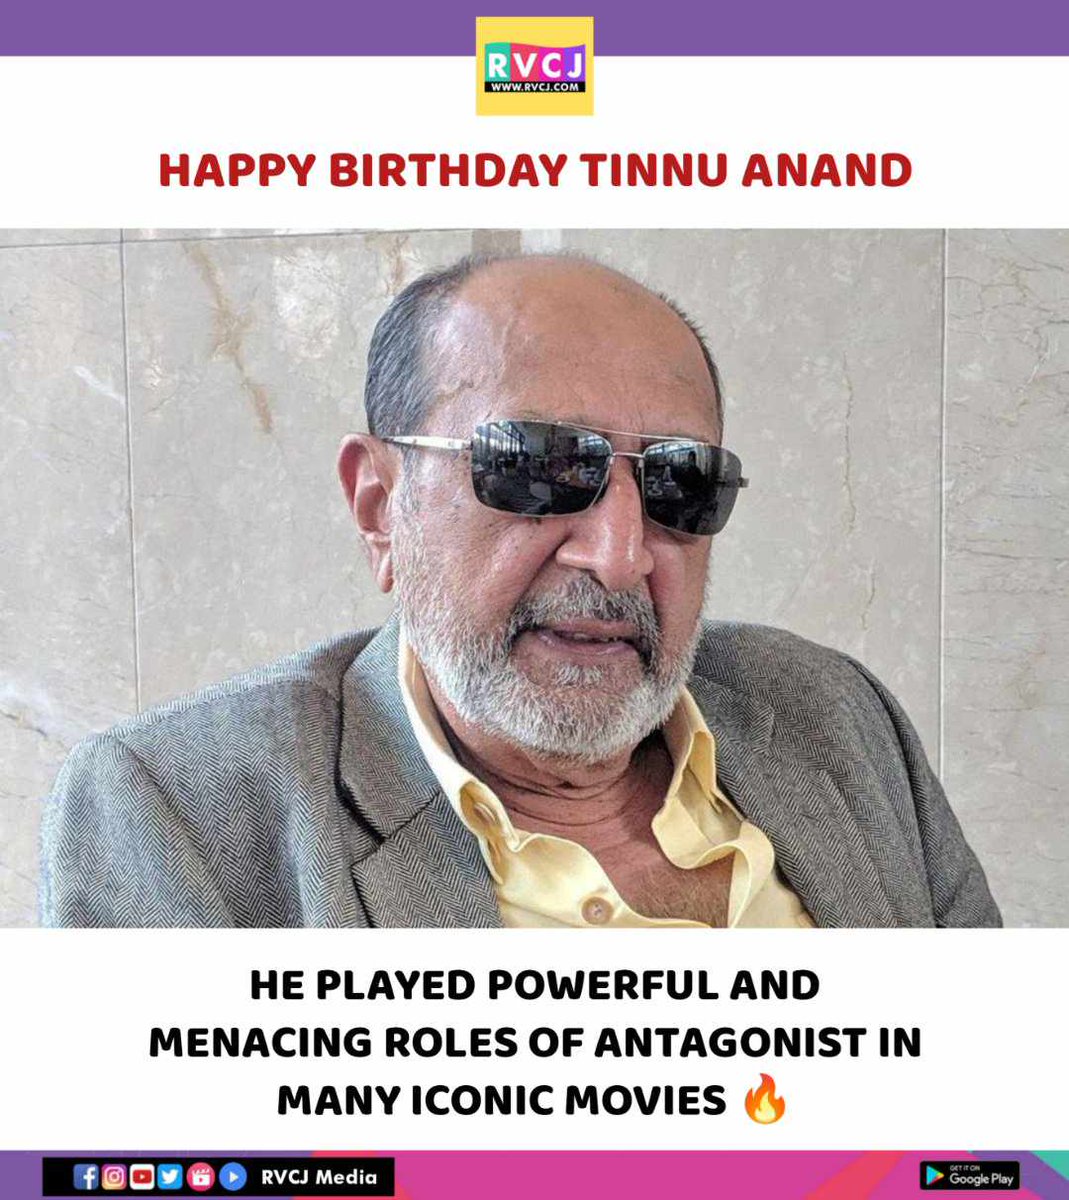 Happy Birthday Tinnu Anand

#tinnuanand #rvcjinsta #rvcjmovies